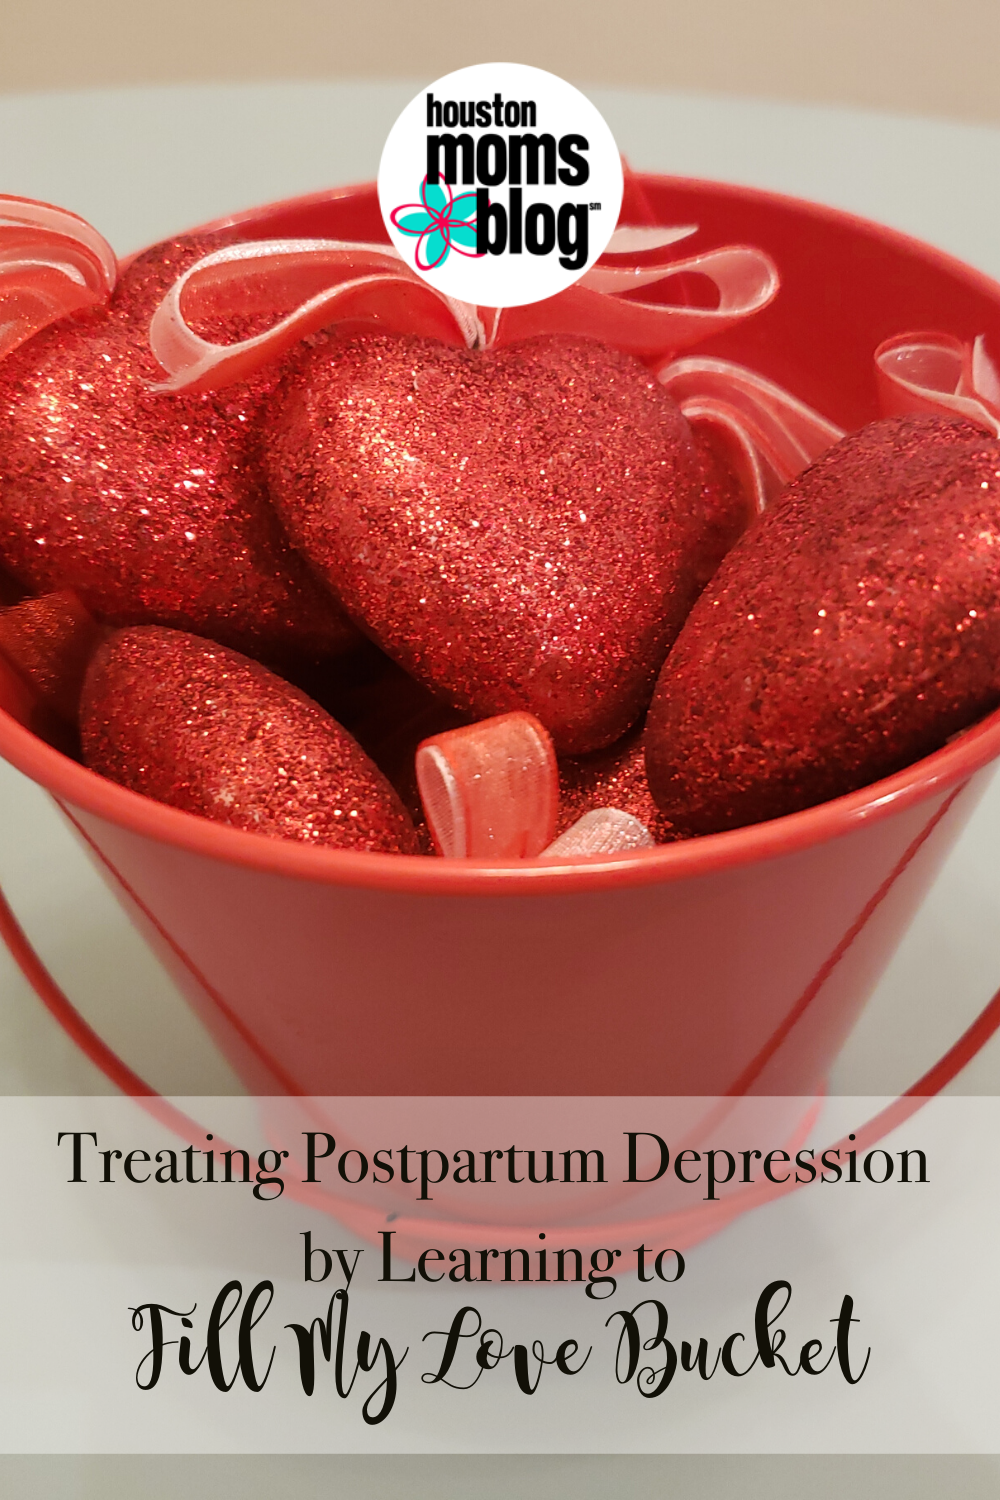 Houston Moms Blog "Treating Postpartum Depression by Learning to Fill My Love Bucket" #houstonmomsblog #momsaroundhouston